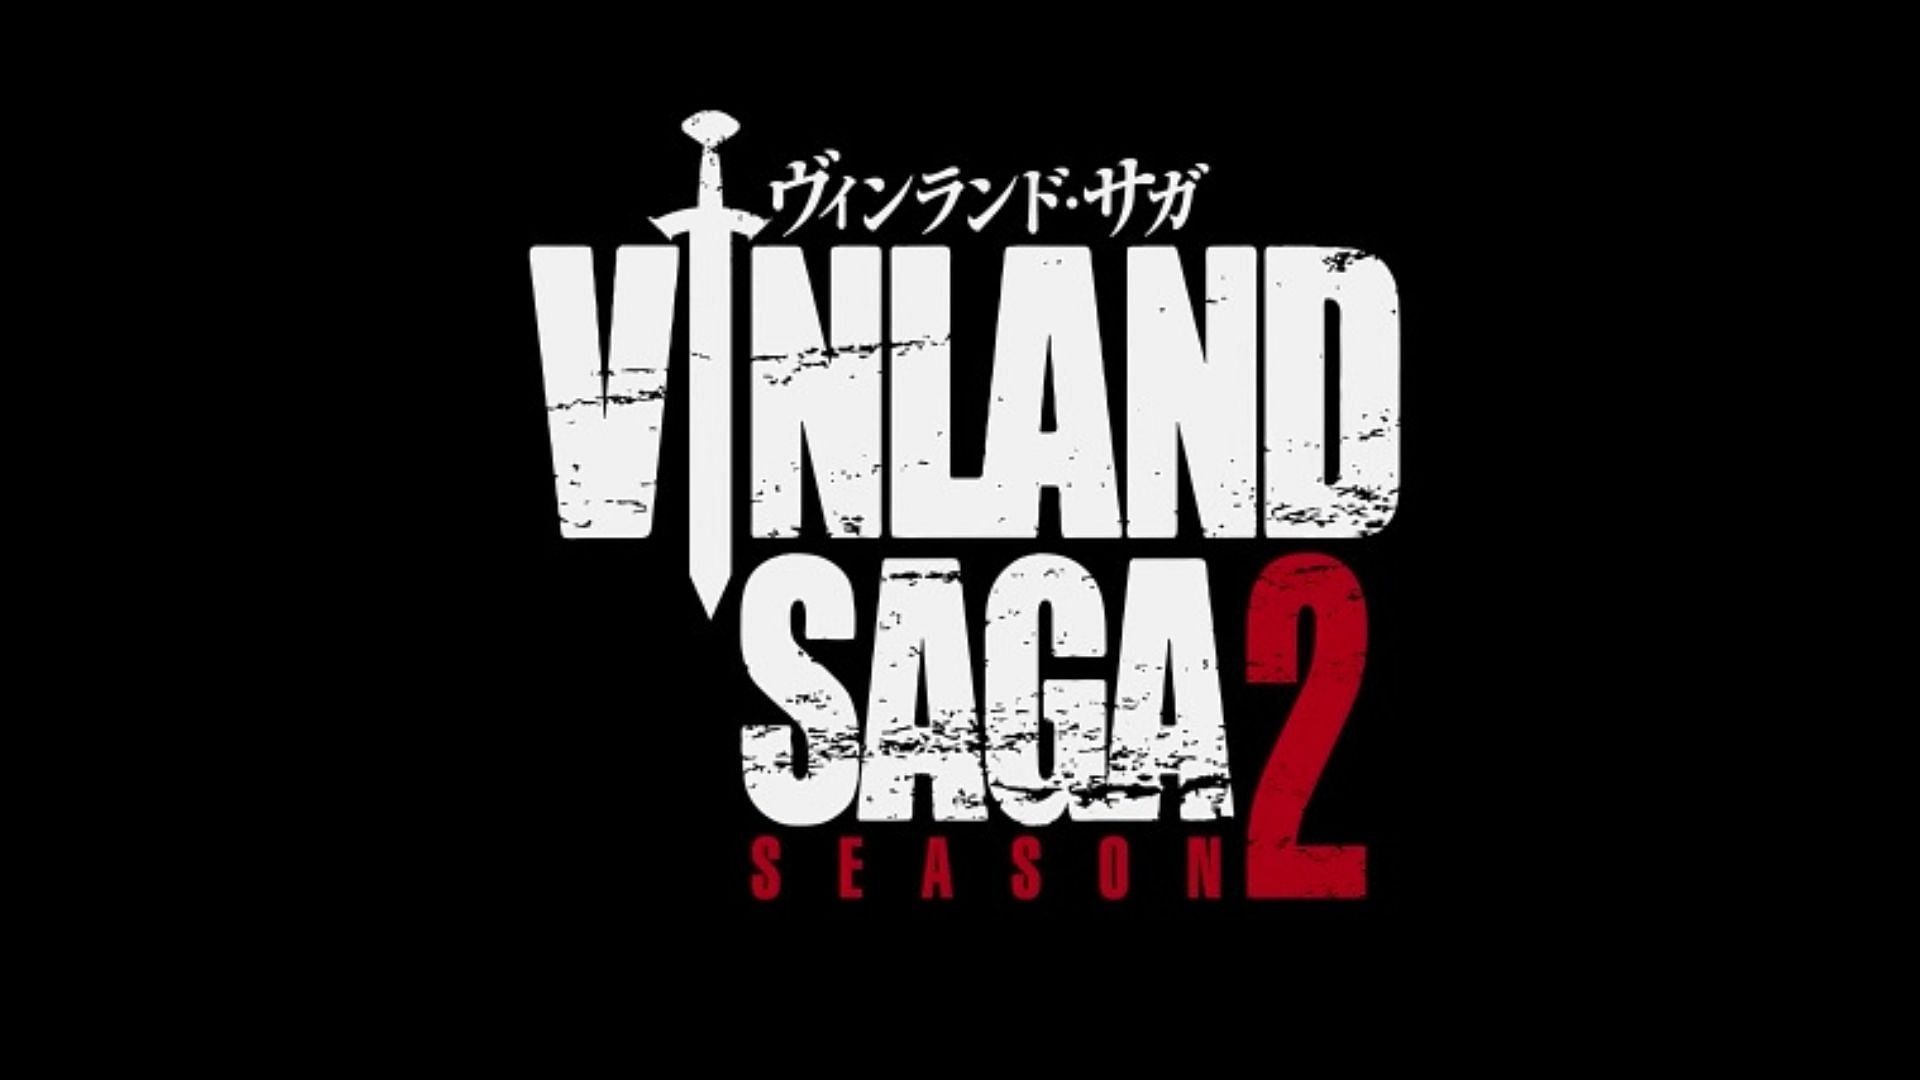 Vinland Saga season 2 episode 10 release date, time and preview trailer